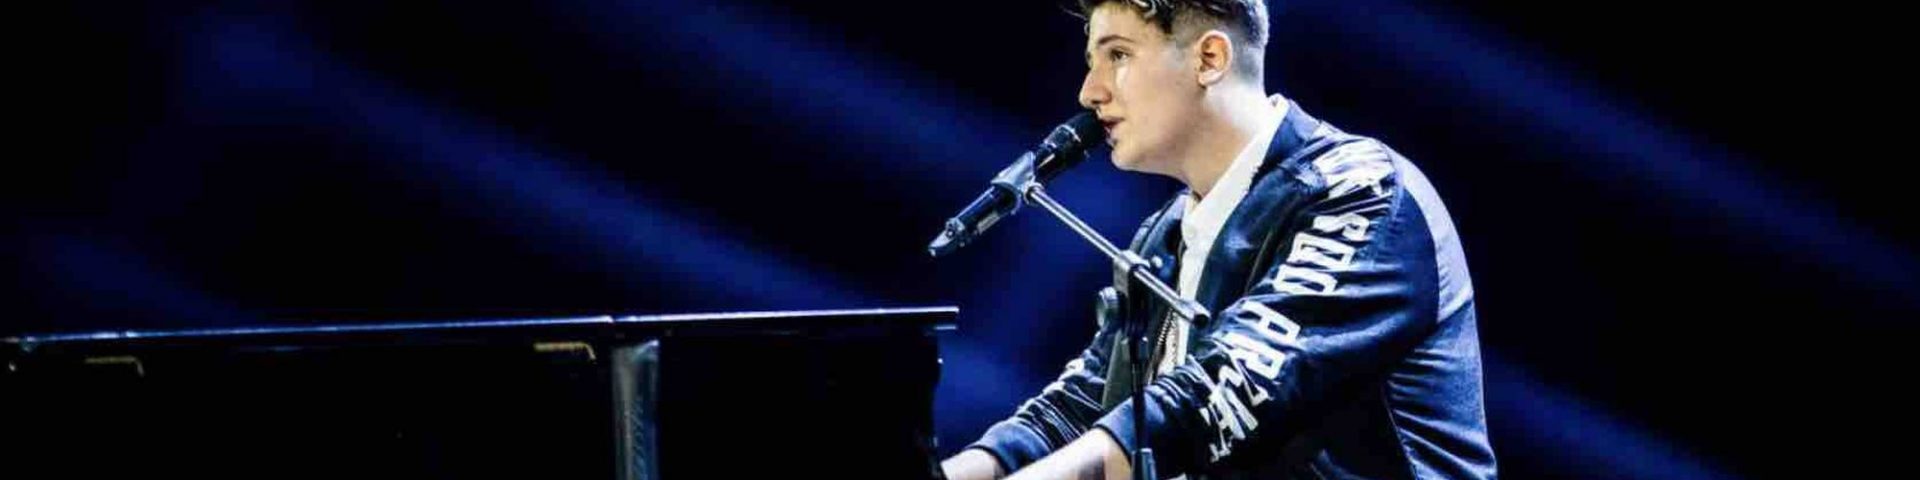 X Factor 12, Emanuele Bertelli eliminato al terzo Live - Riassunto